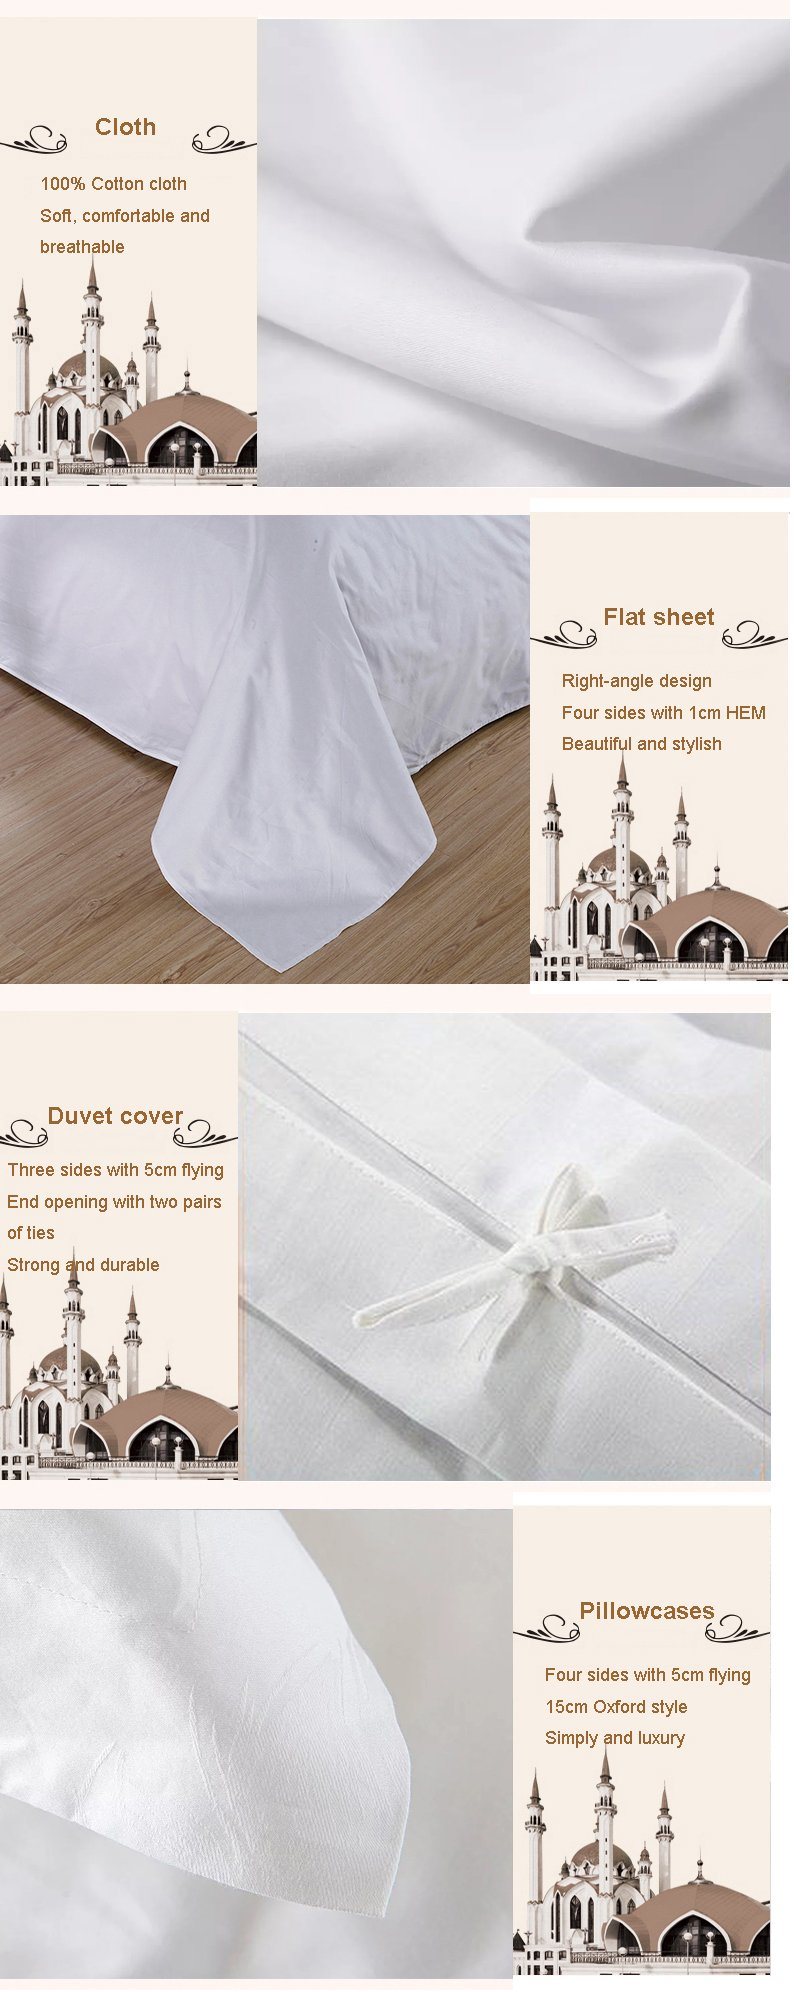 Quality Hotel Satin Bedding Set White Full Cotton Hotel Bed Sheet Set (JRD995)